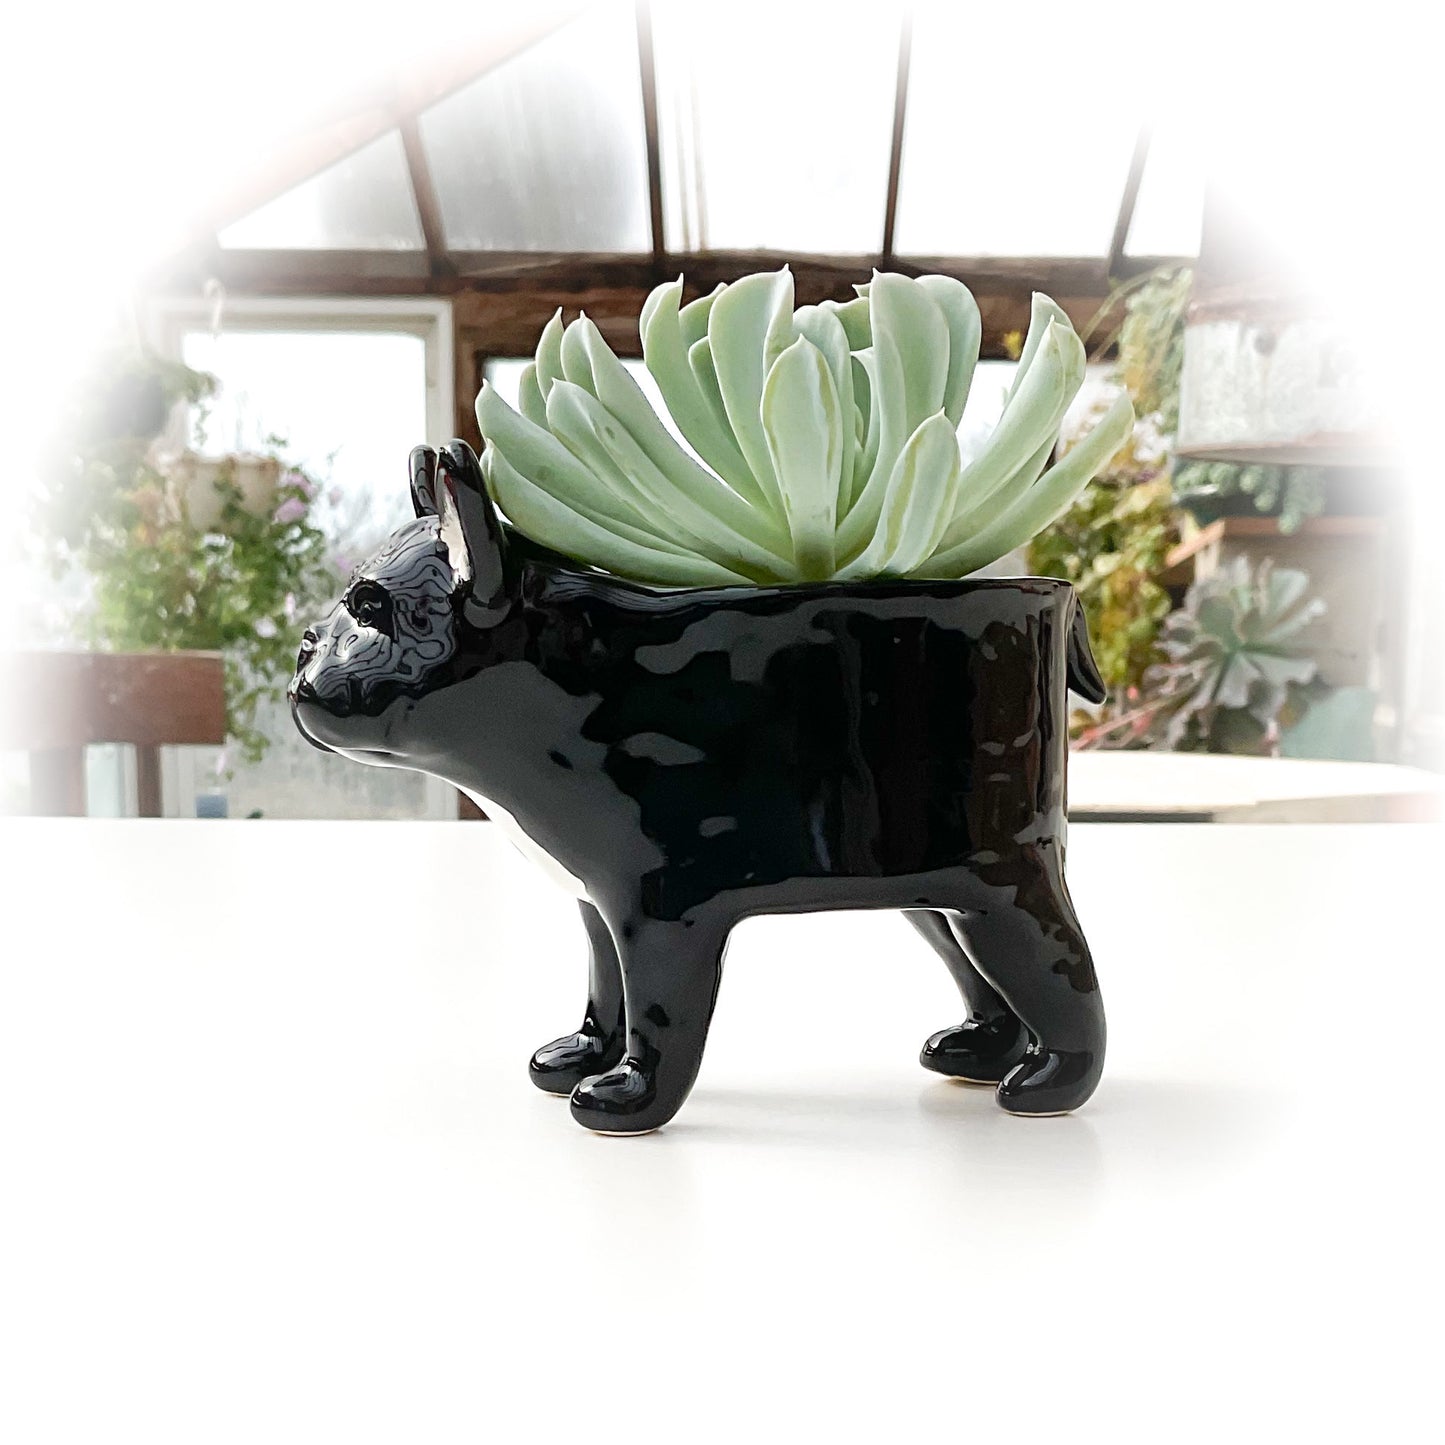 French Bulldog Dog Planter - Ceramic Dog Plant Pot